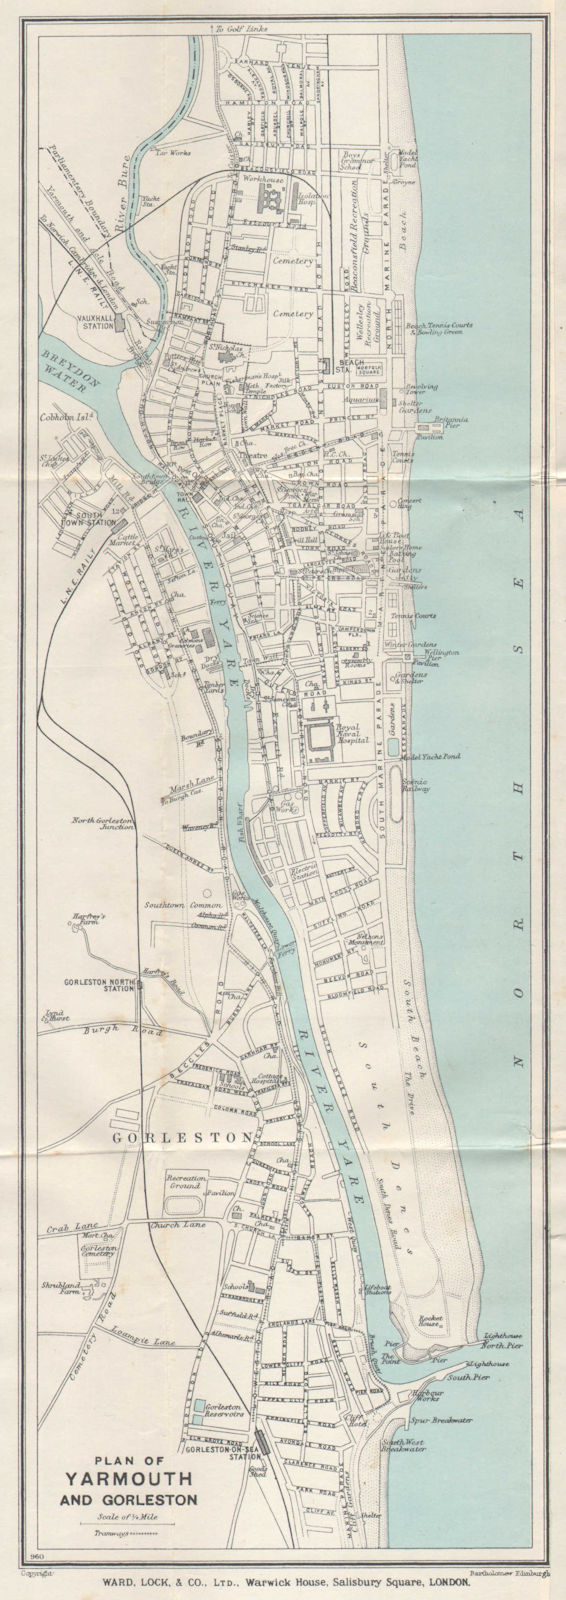 YARMOUTH & GORLESTON vintage tourist town city plan. Norfolk. WARD LOCK 1928 map